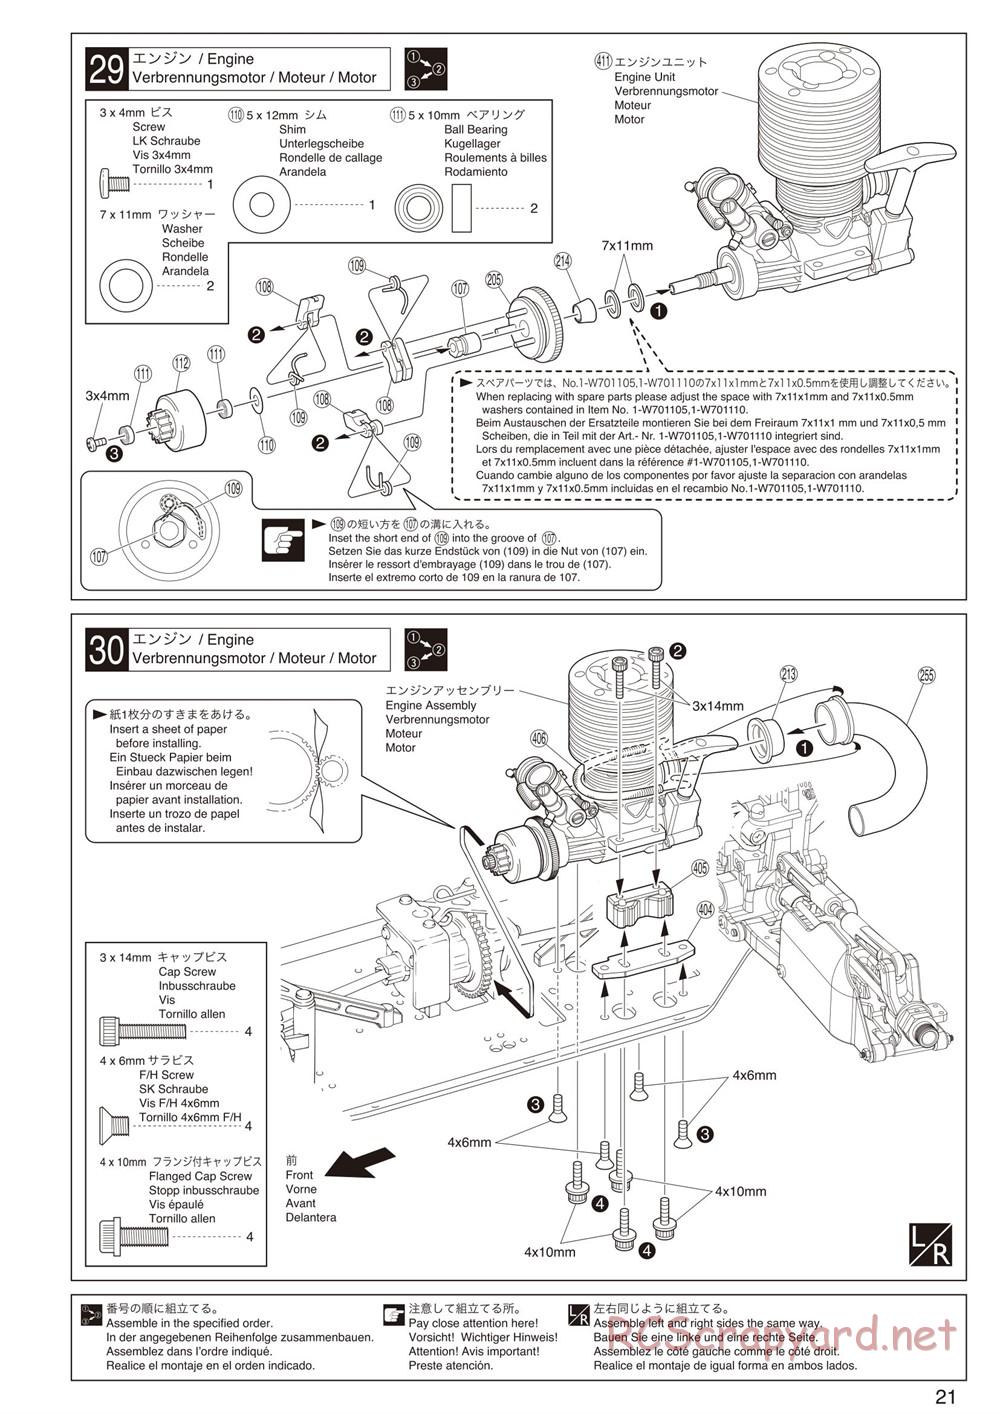 Kyosho - Inferno NEO ST Race Spec - Manual - Page 21